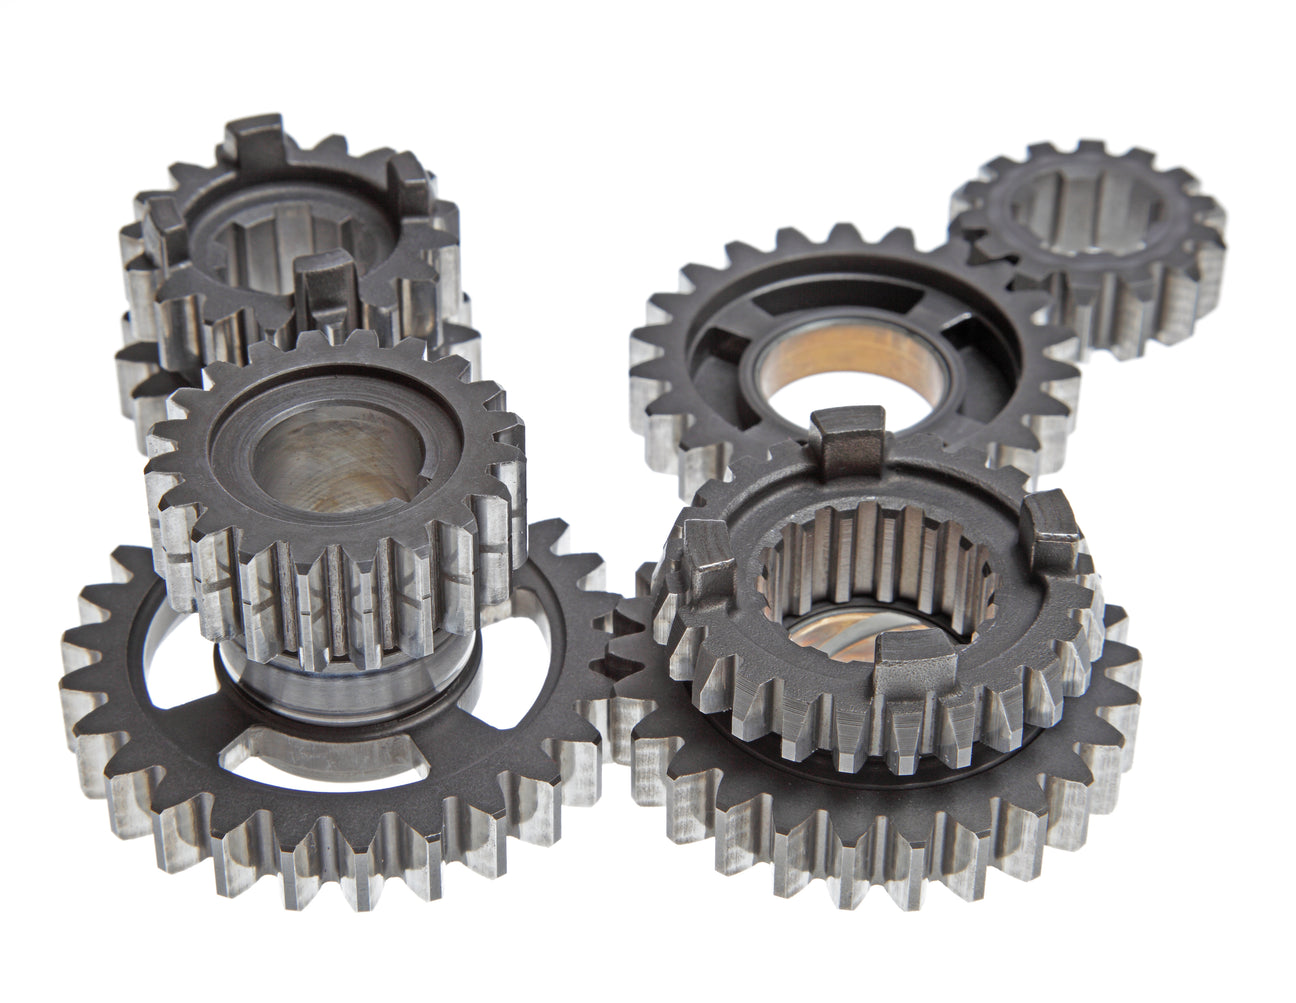 Industrial - Gears, Sprockets & Other Mechanisms